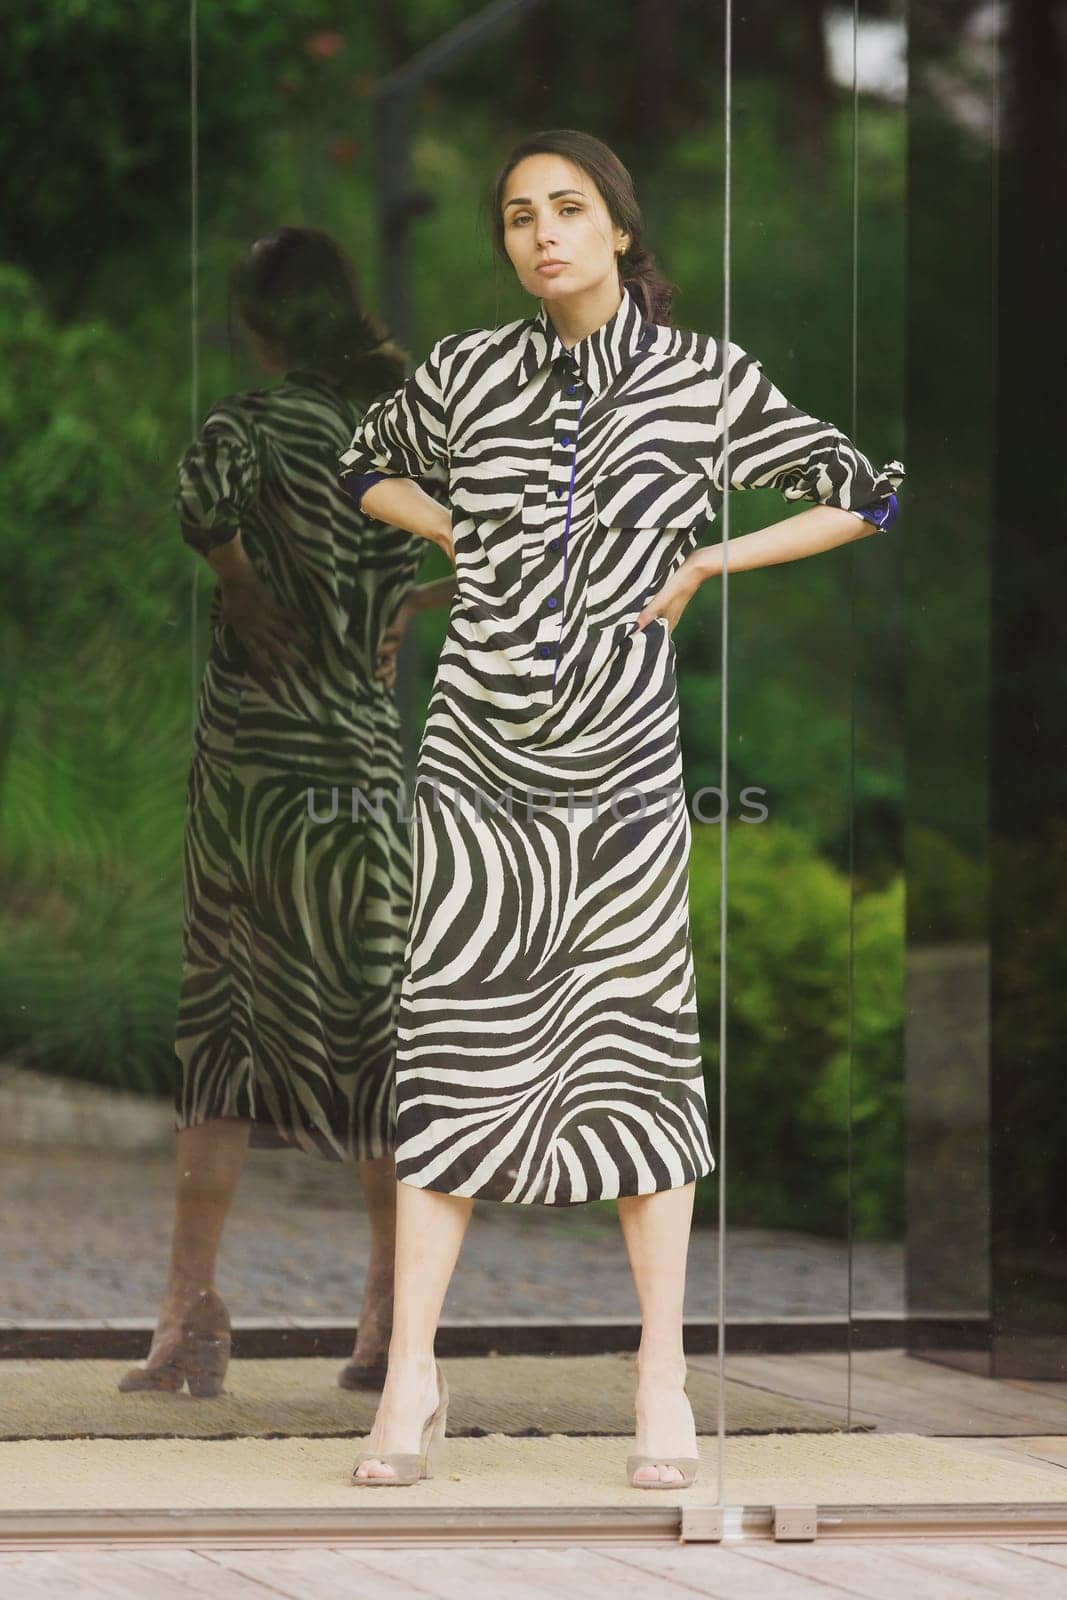 High fashion photo of a beautiful elegant young woman in a pretty zebra print dress posing outdoor. Slim figure by sarymsakov